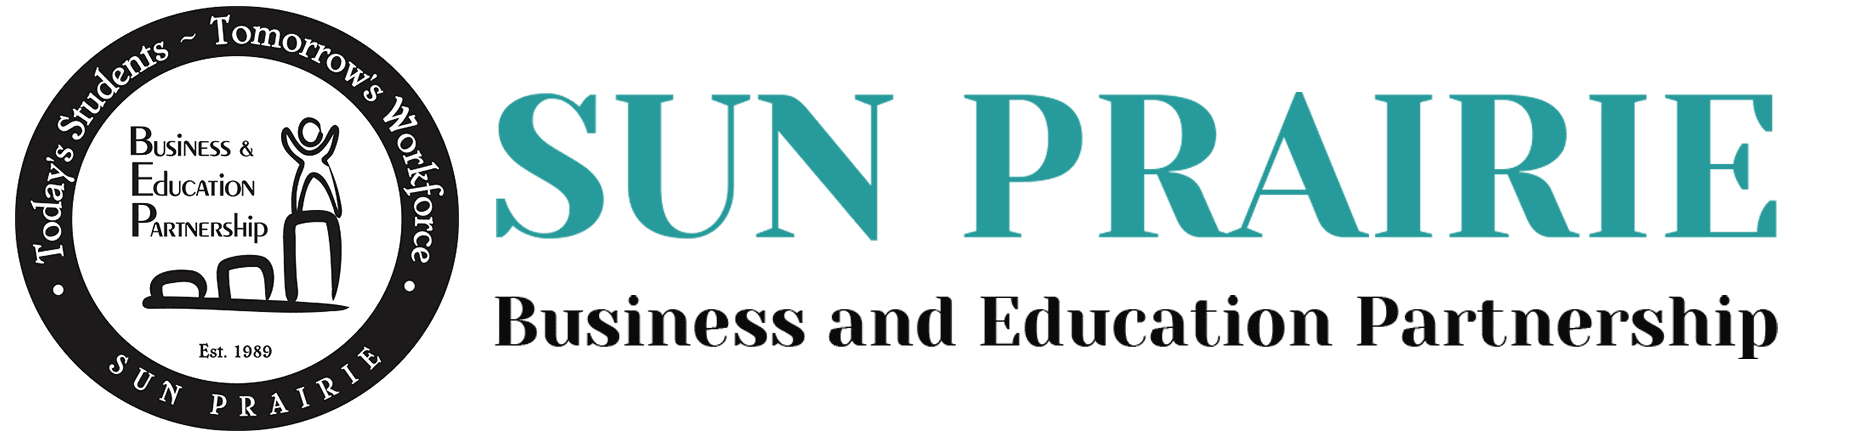 Sun Prairie Business and Education Partnership